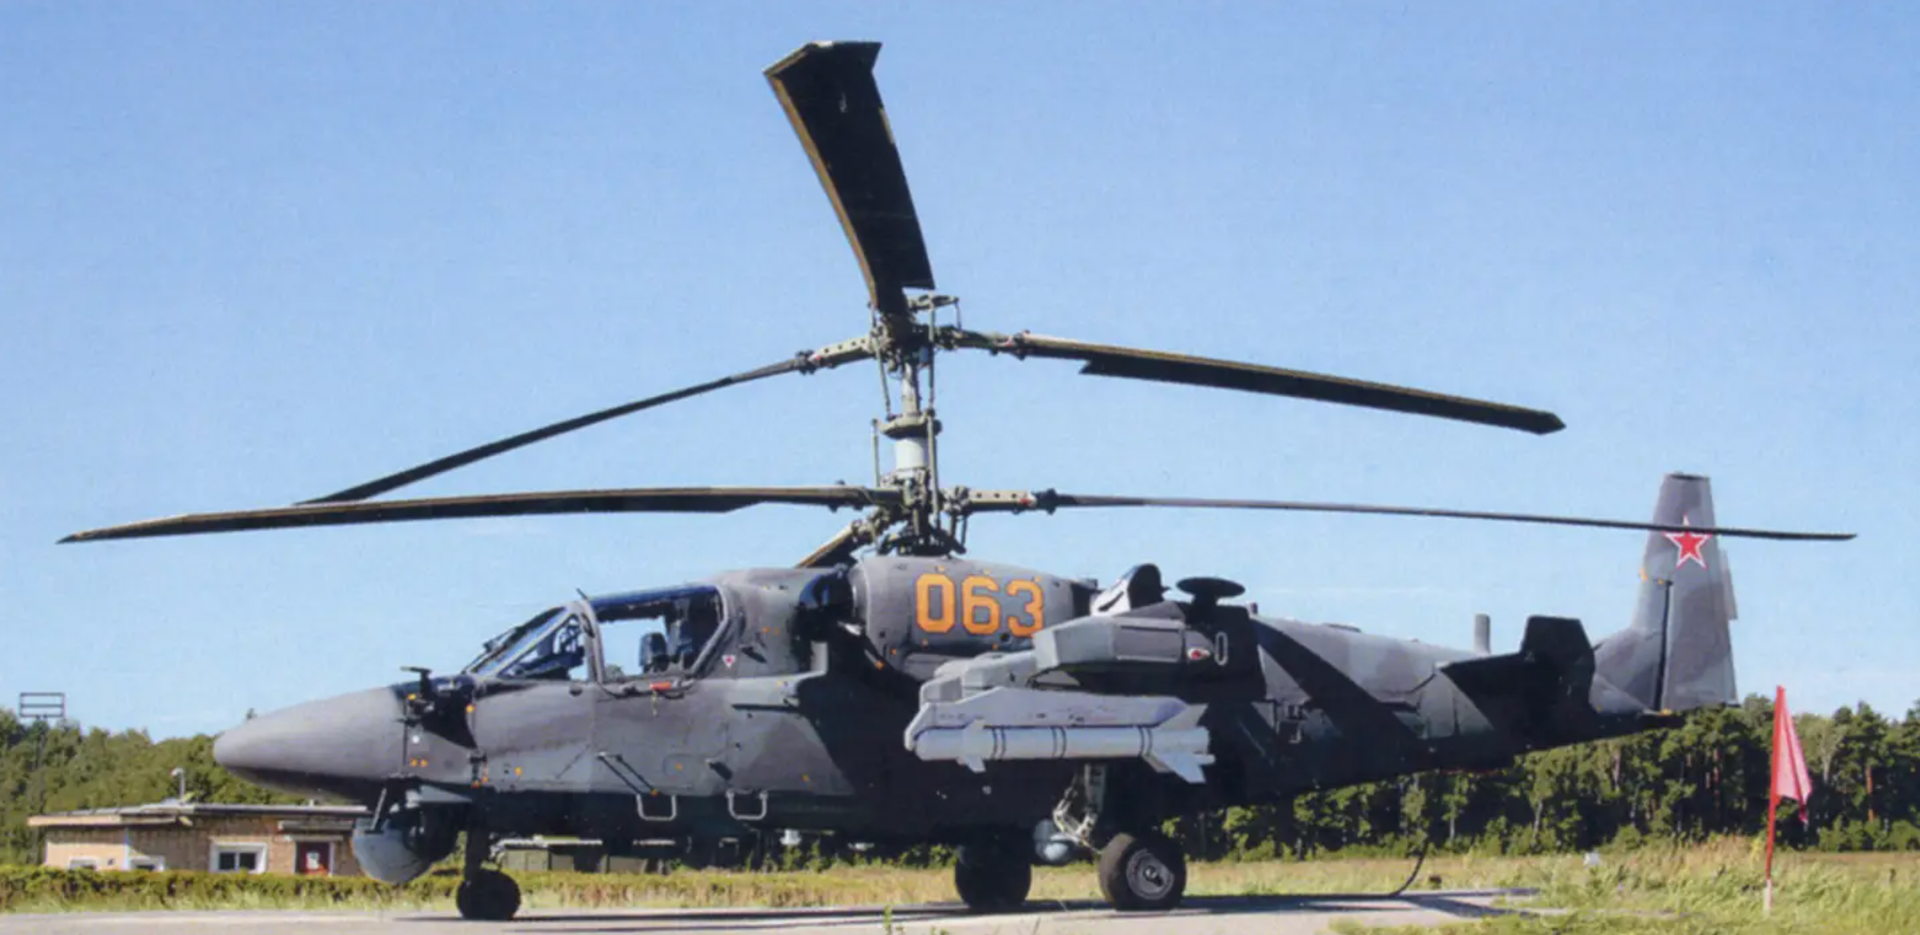 Ka-52M prototype with LMUR missiles